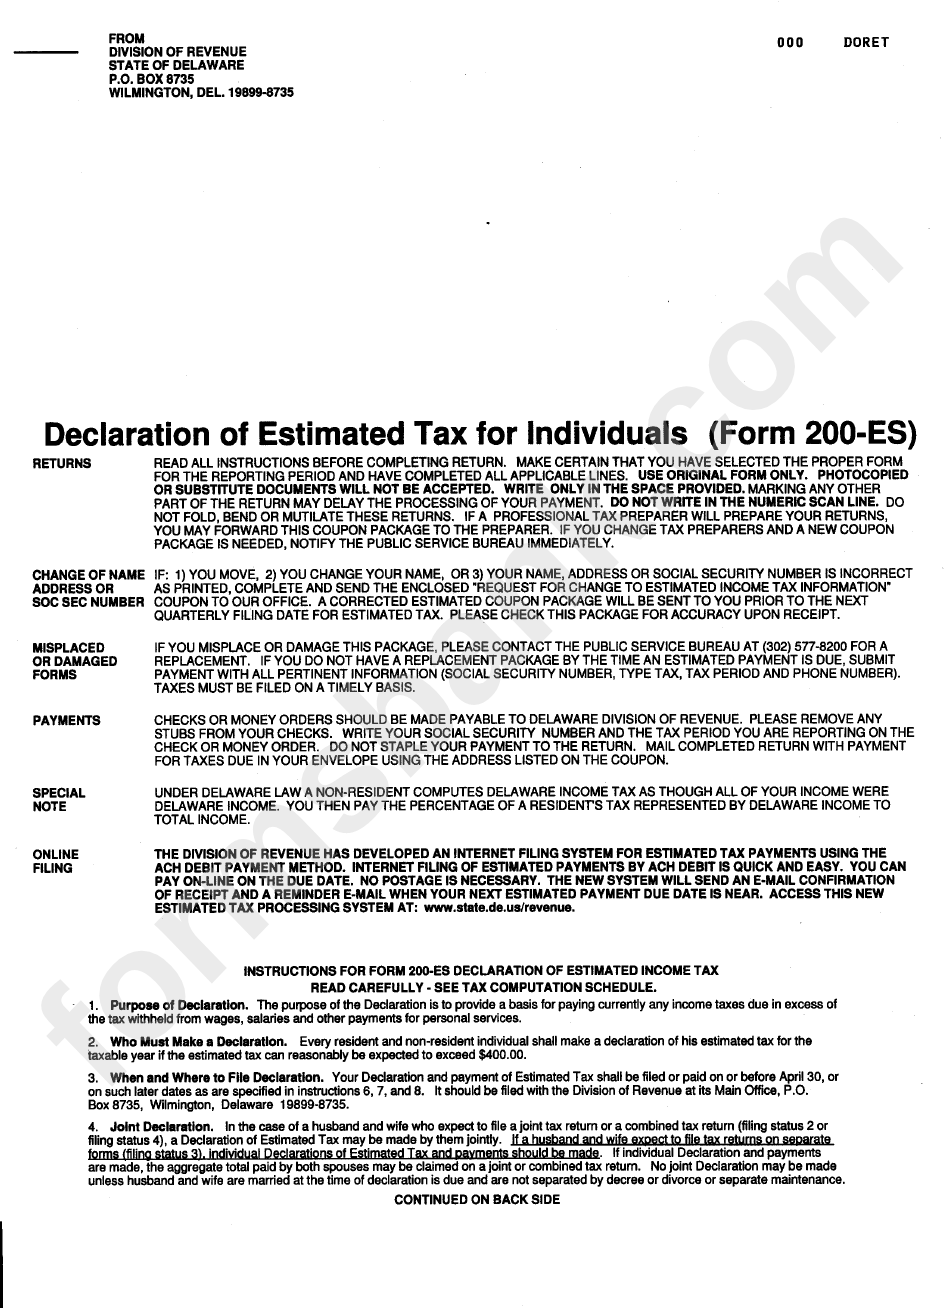 Form 200Es Declaration Of Estimated Tax For Individuals Delaware